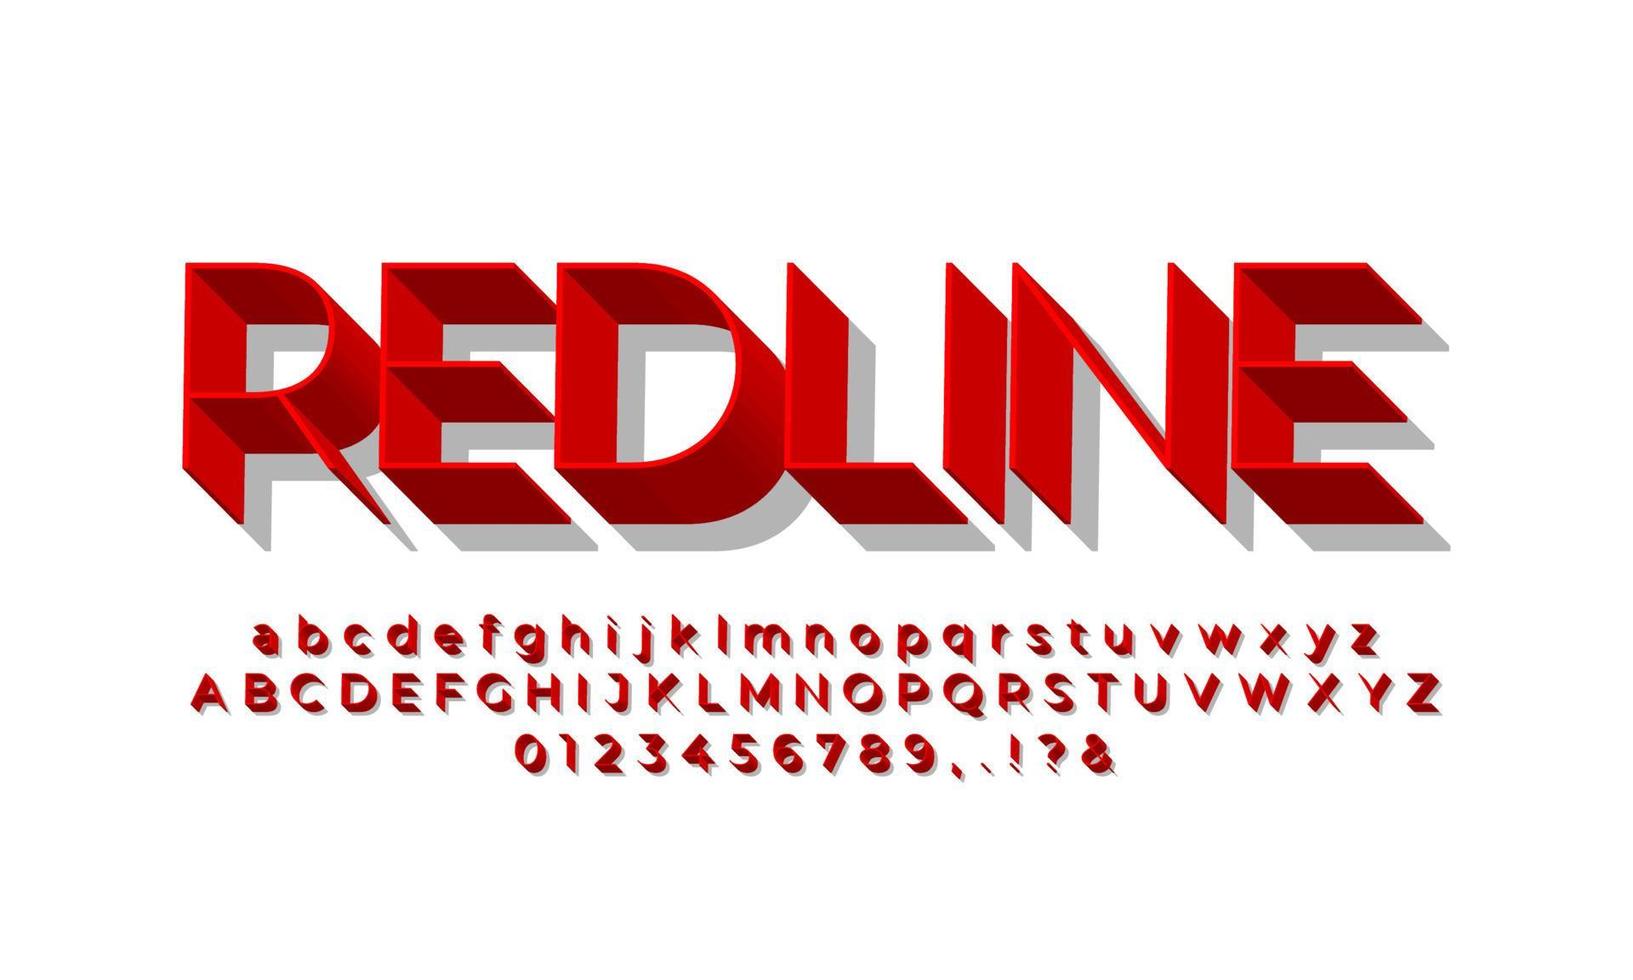 thin 3d red letter number or font effect design vector